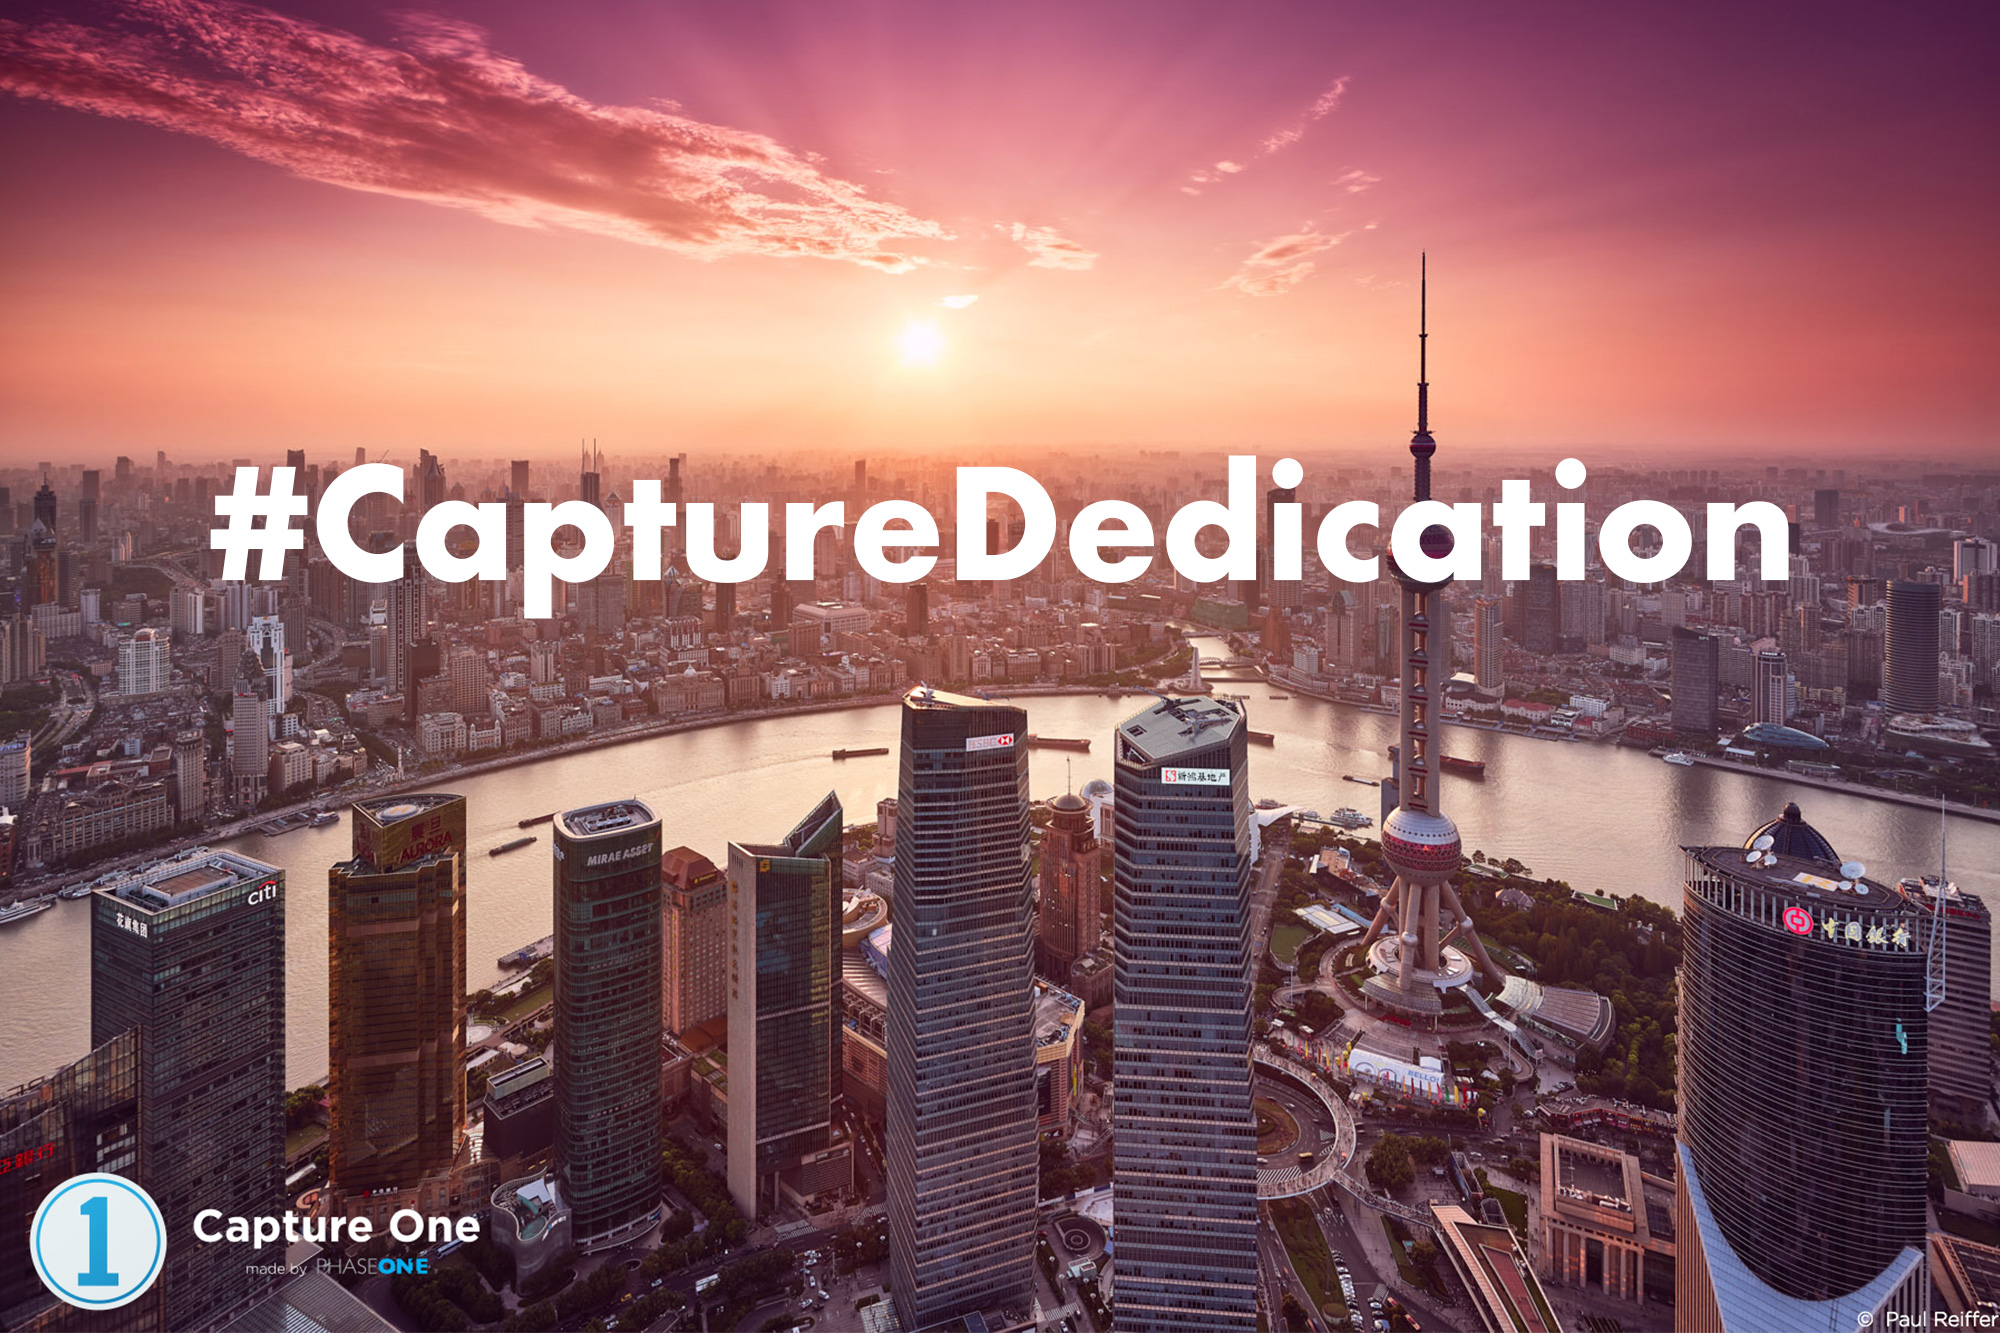 Capture One’s “Capture Dedication” Contest Winners Announced